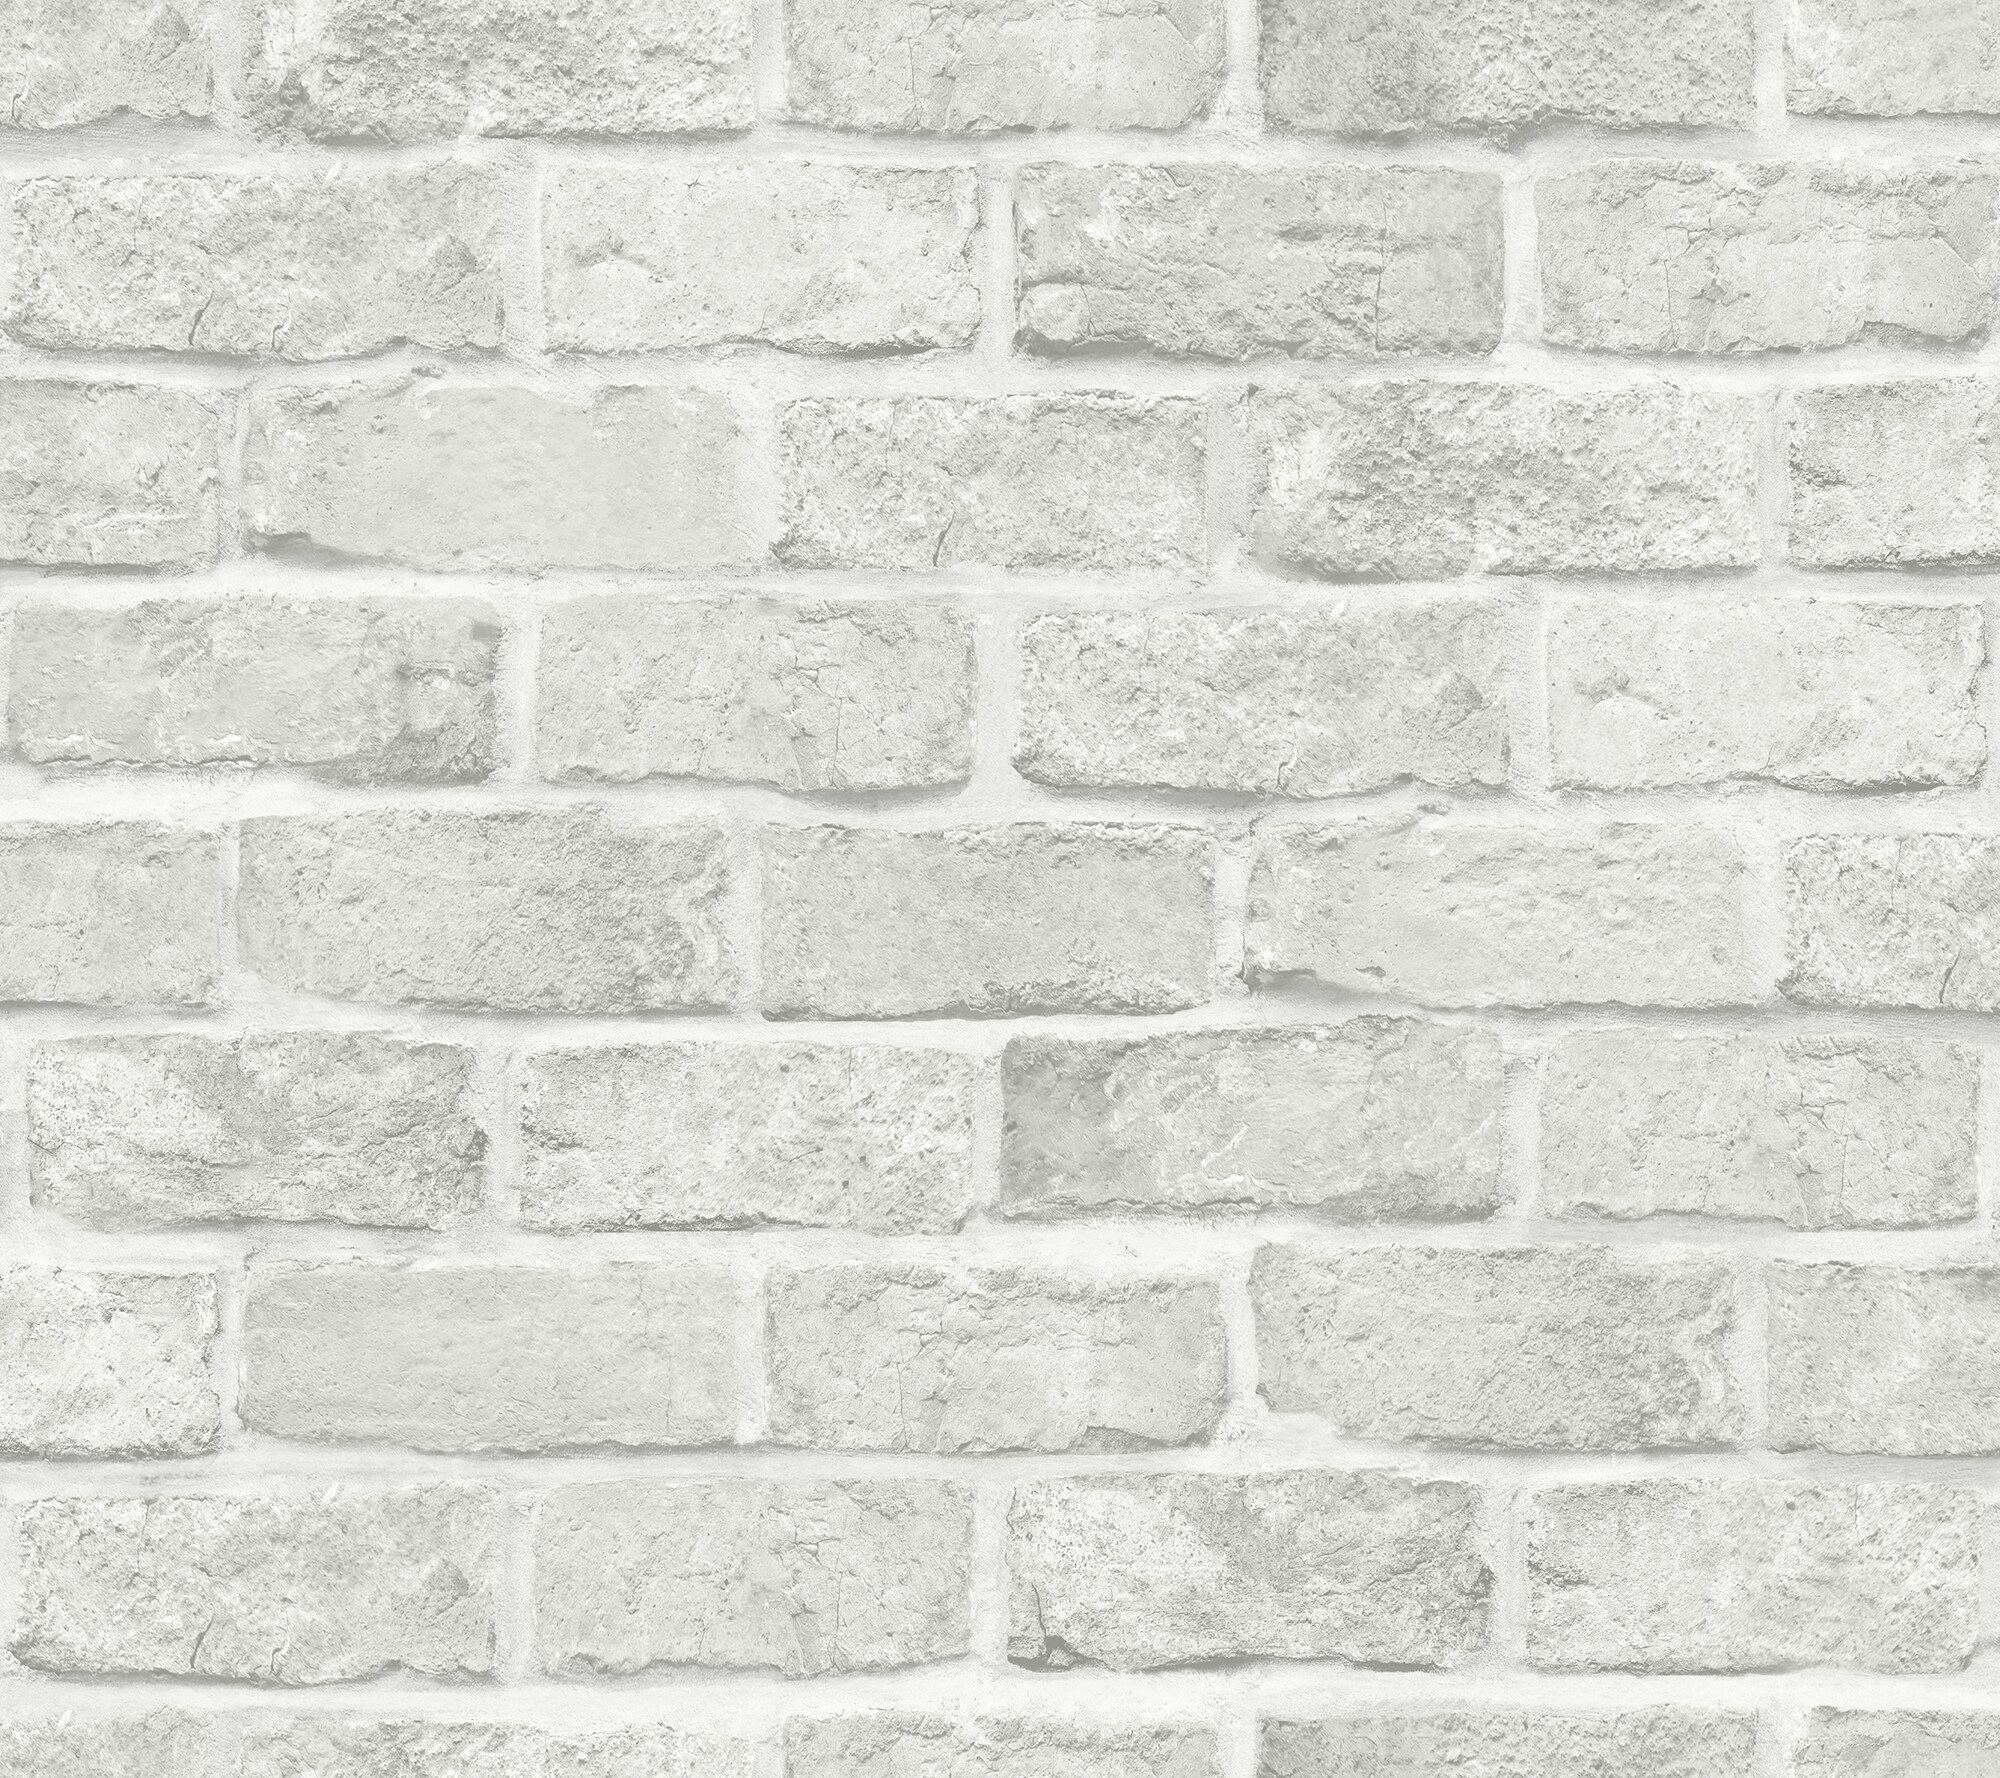 Brick Wallpaper at Lowes.com